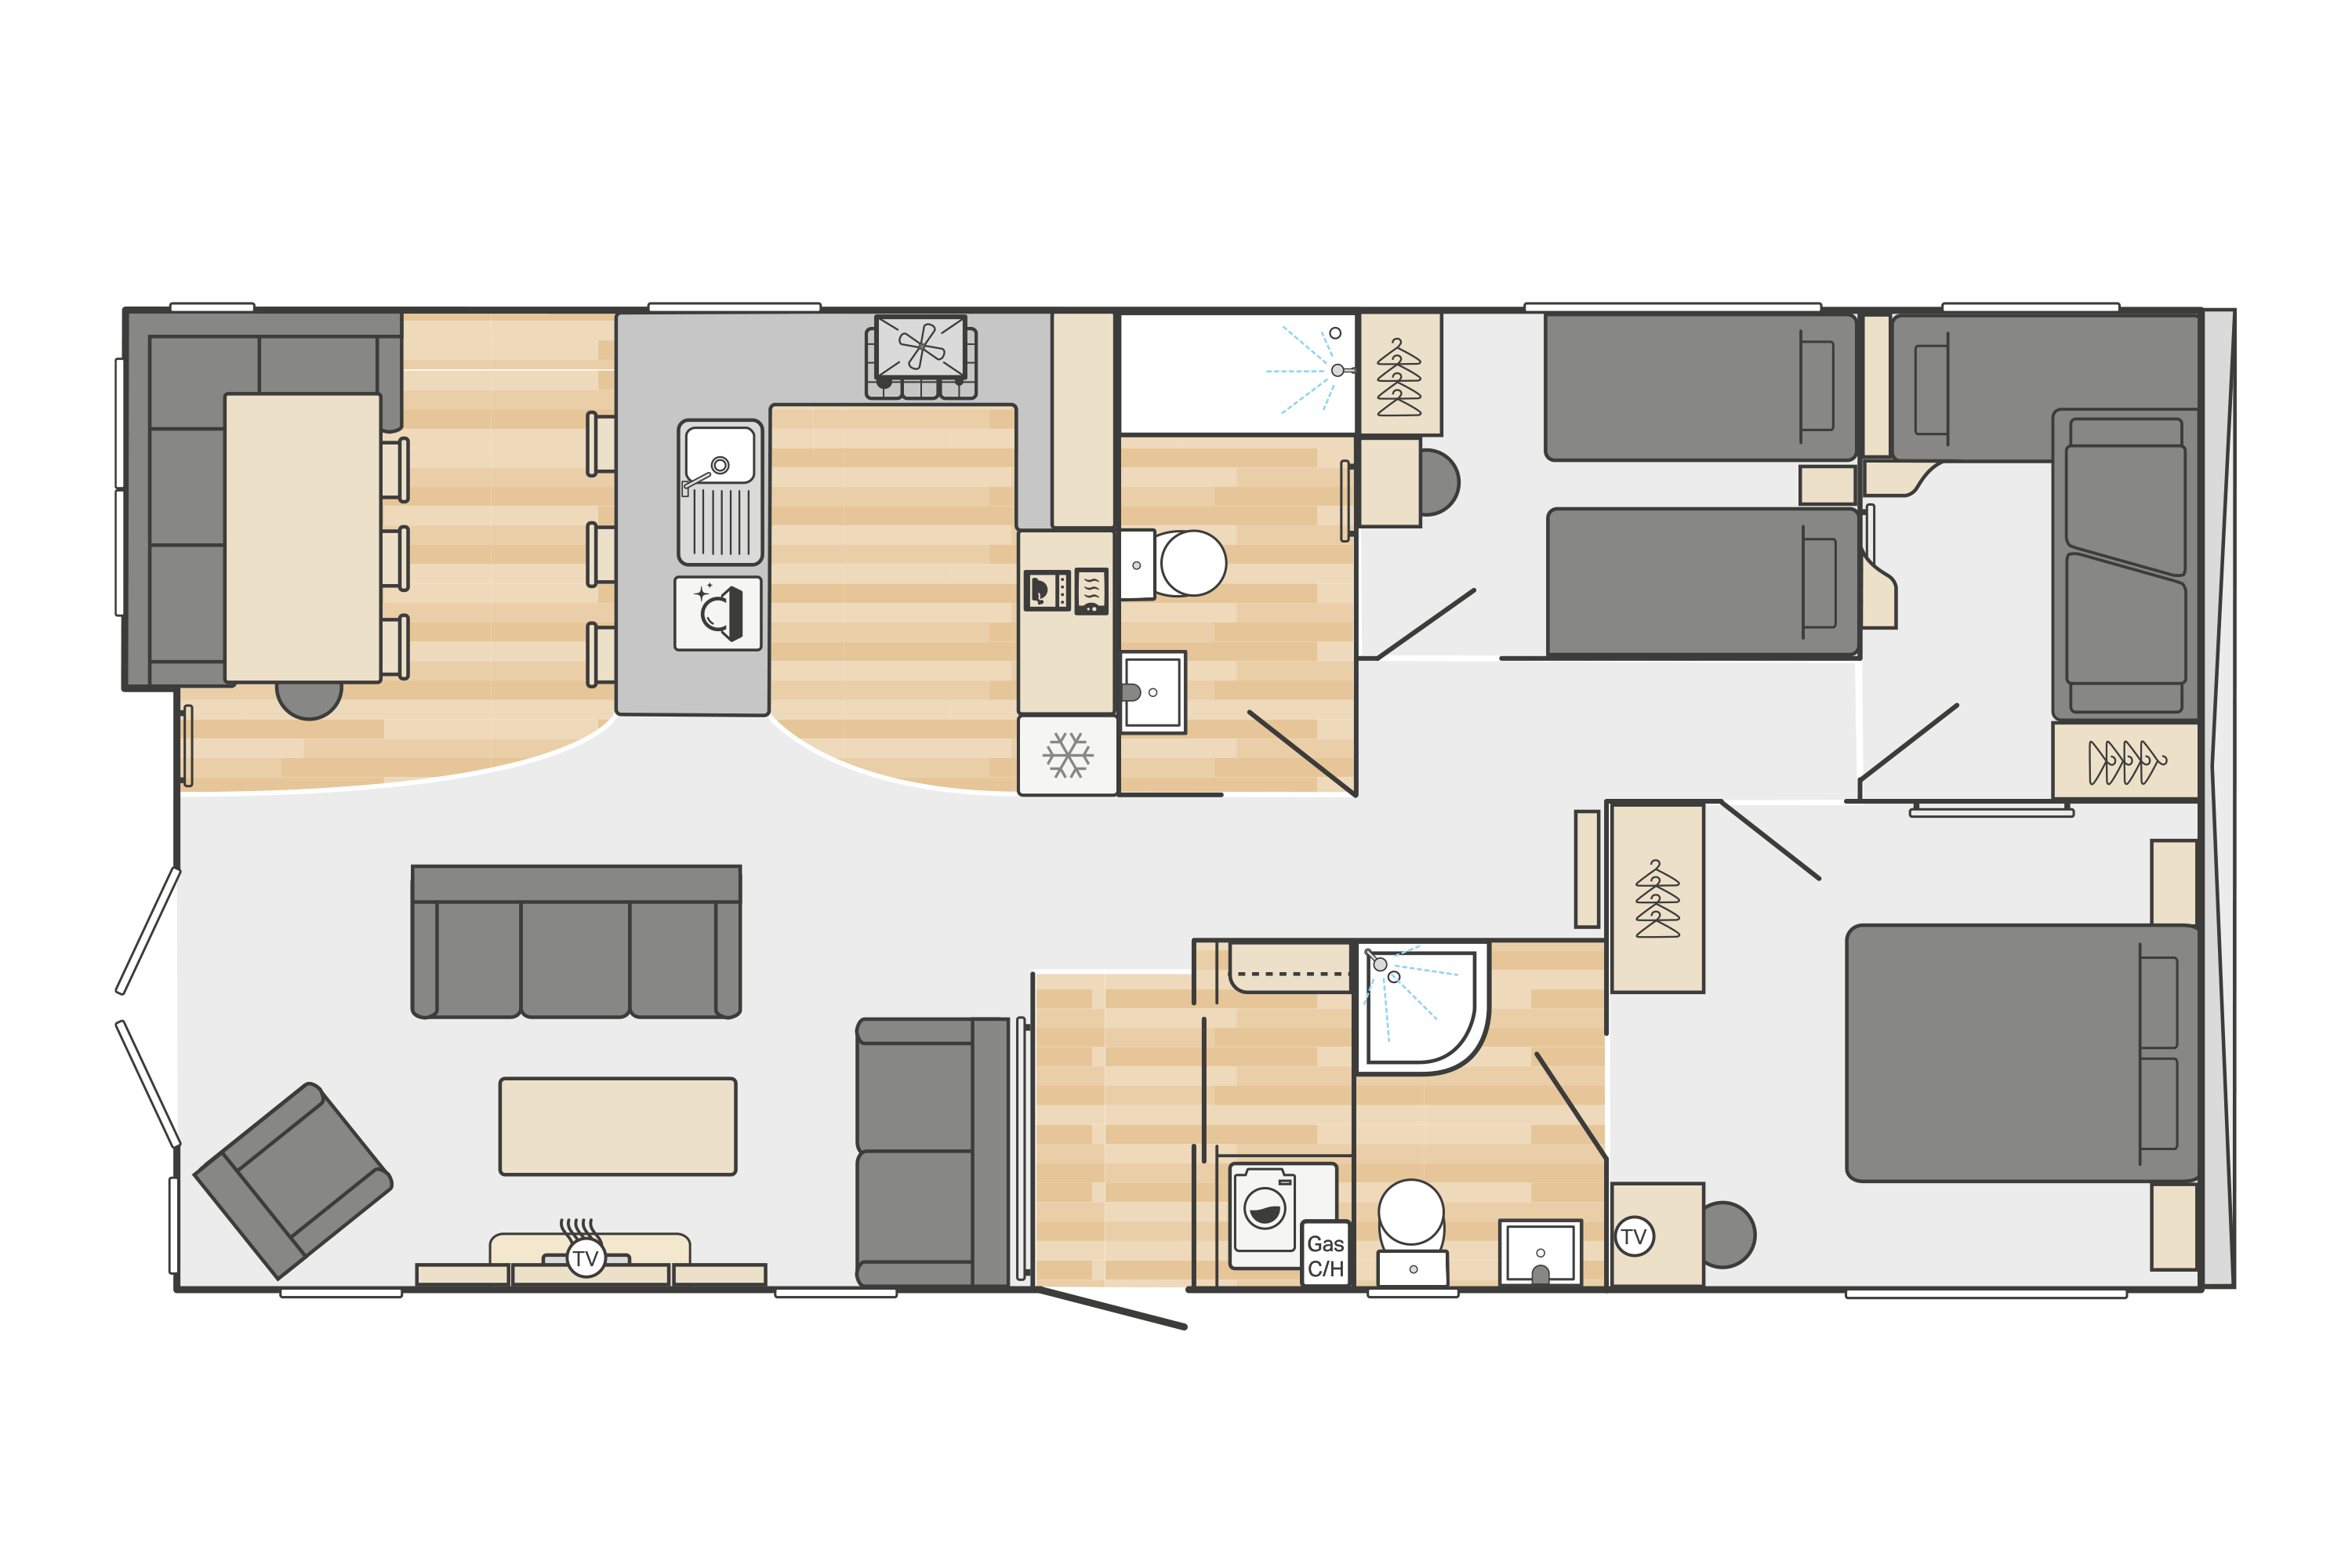 Toronto Lodge 42' x 20' 3 Bedroom floorplan